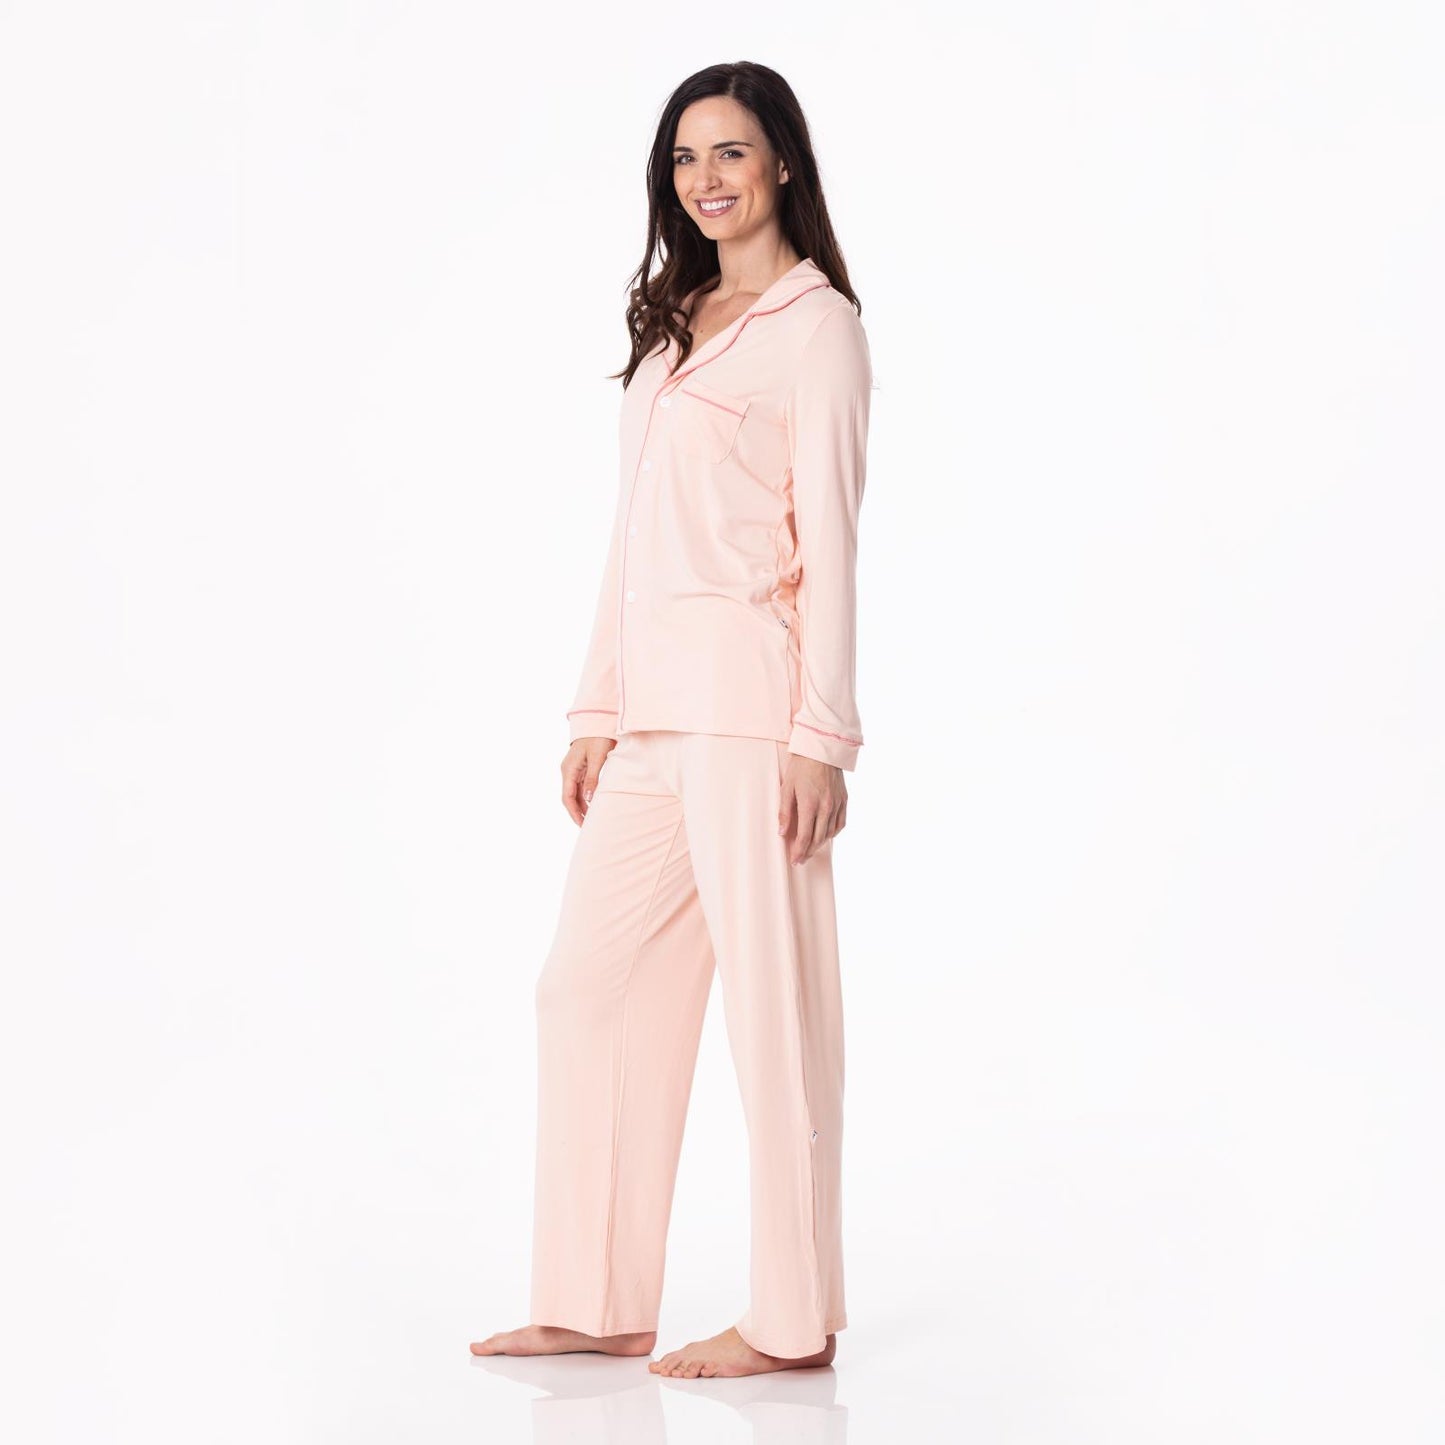 Women's Long Sleeve Collared Pajama Set